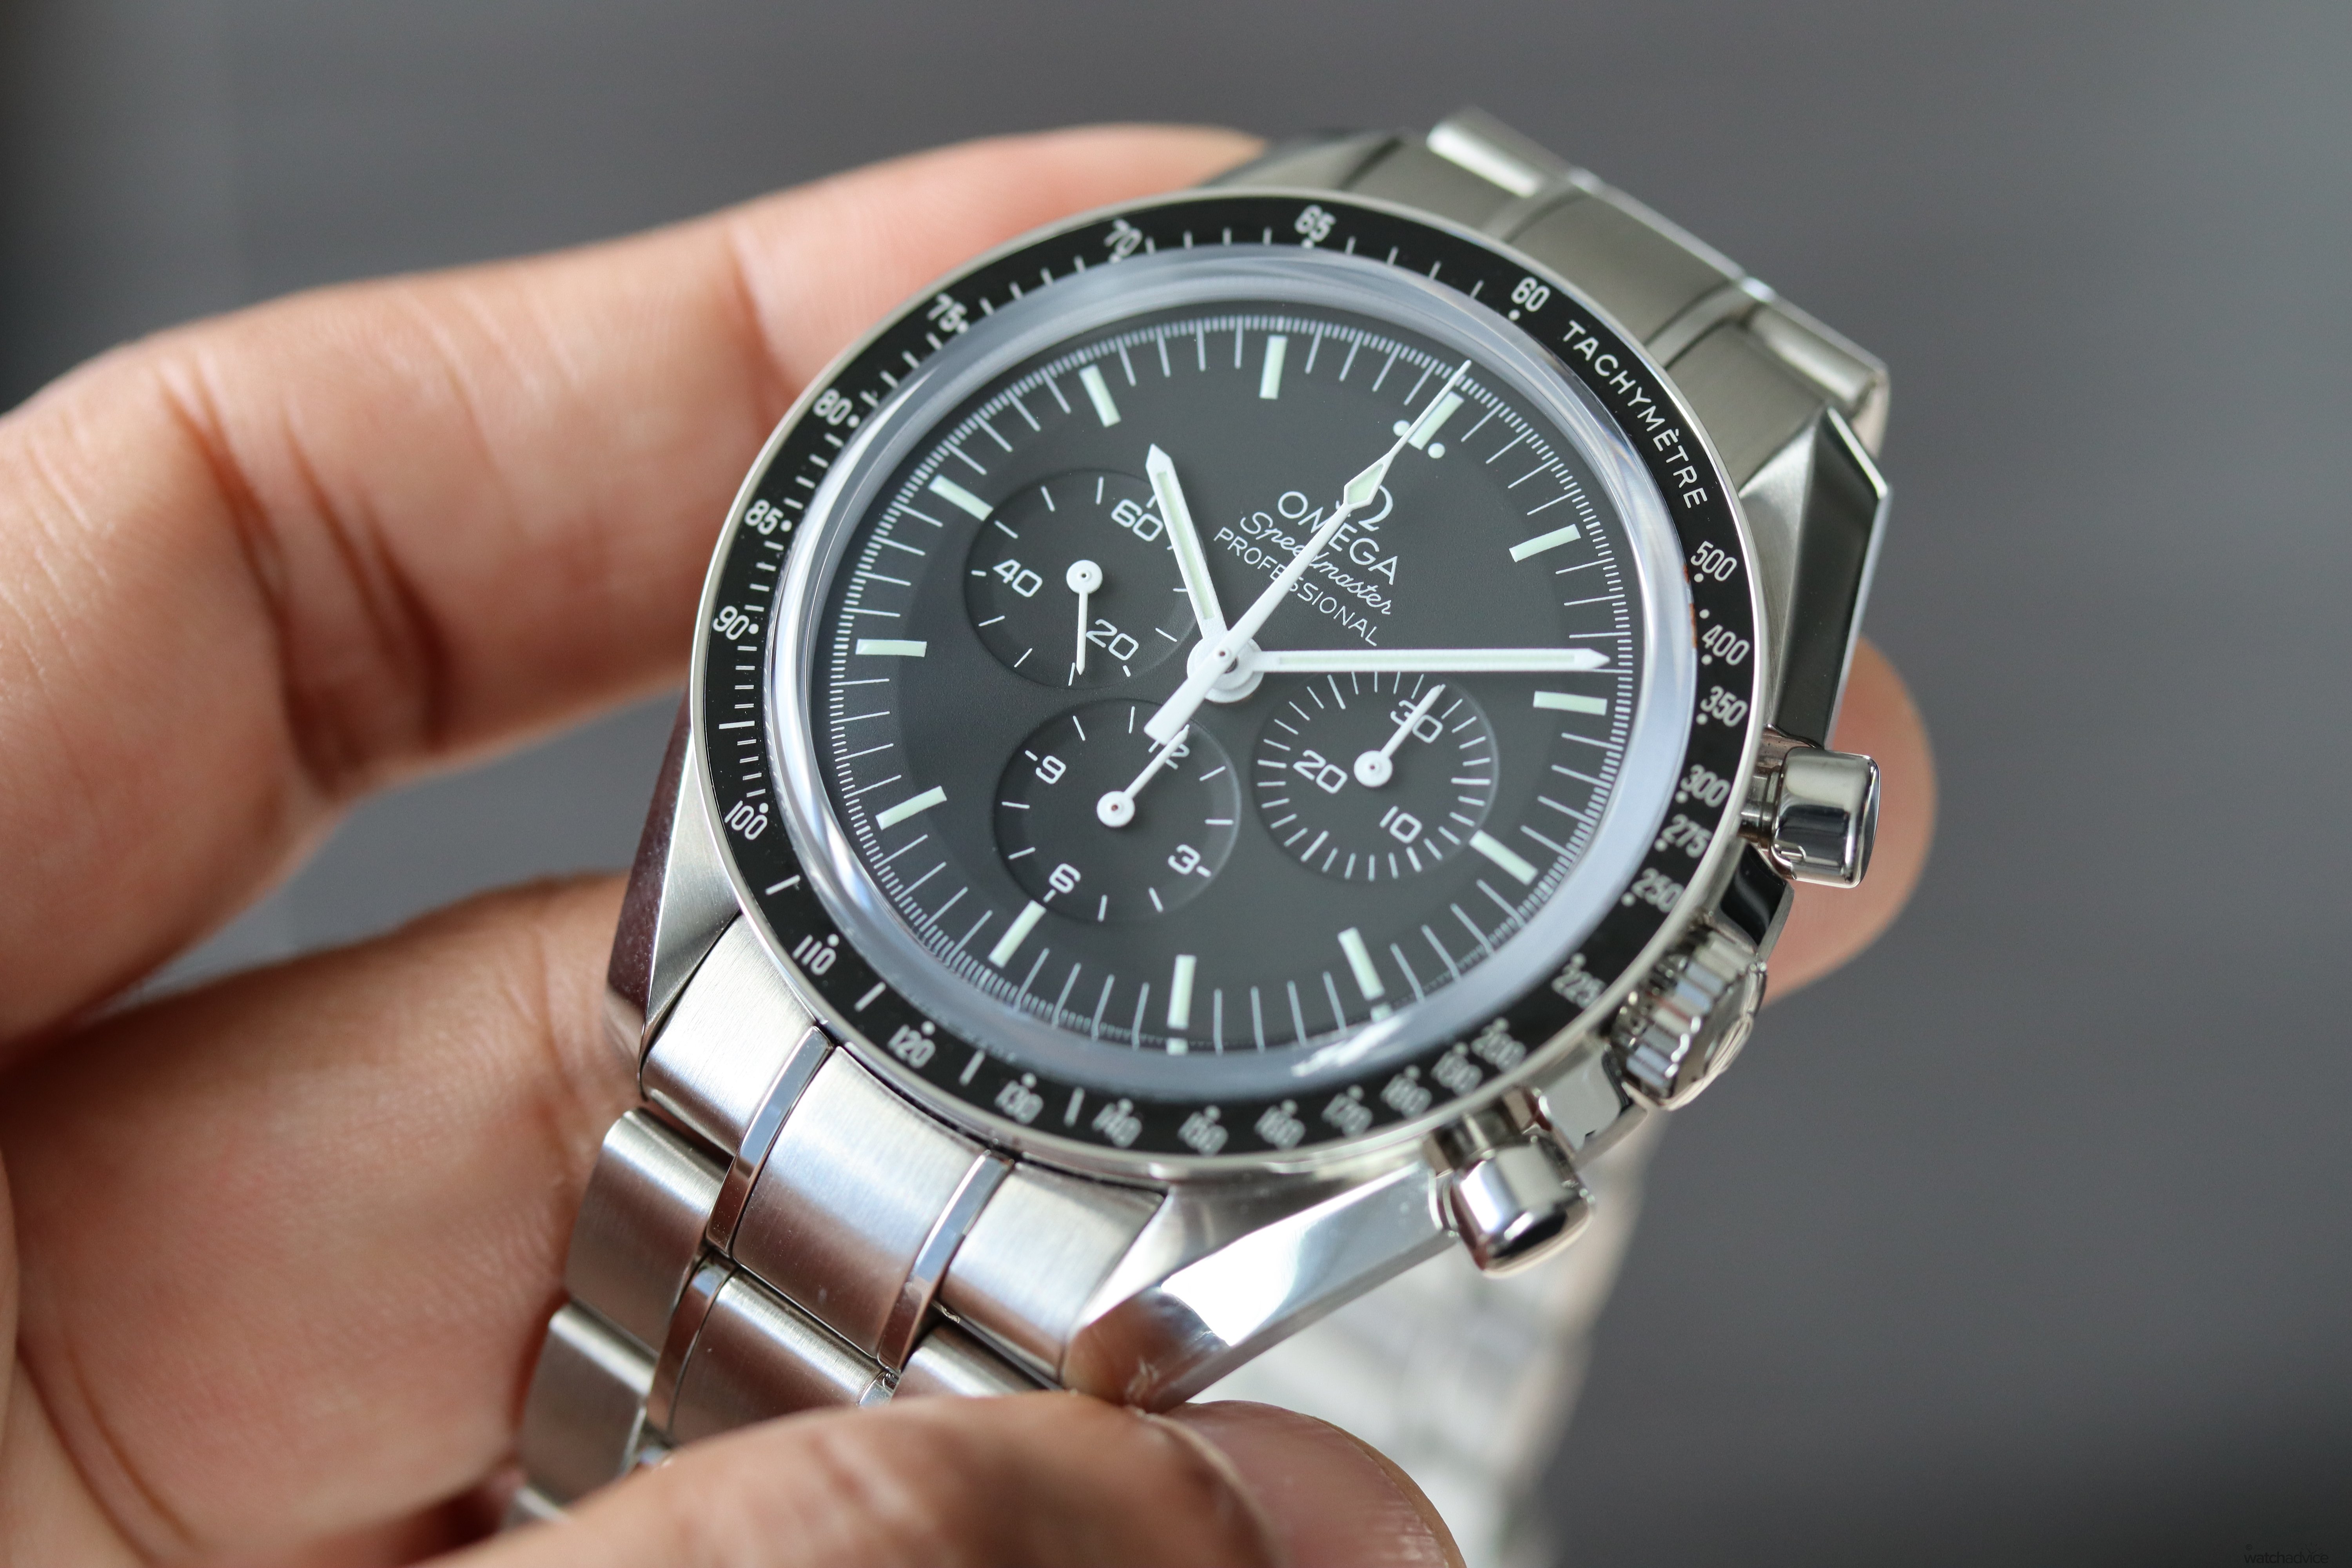 omega speedmaster moonwatch professional chronograph 42mm